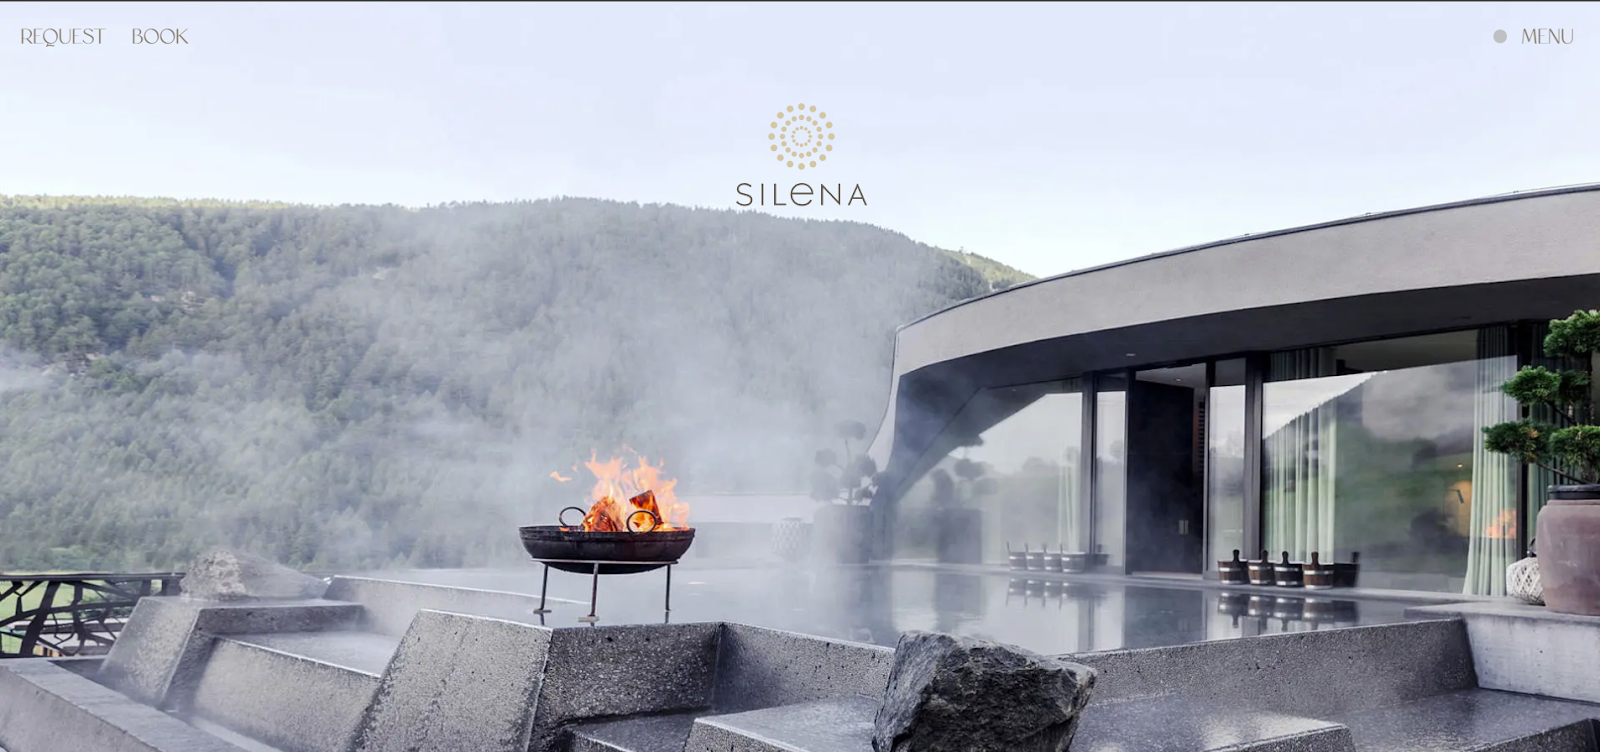 hotel website examples, Silena